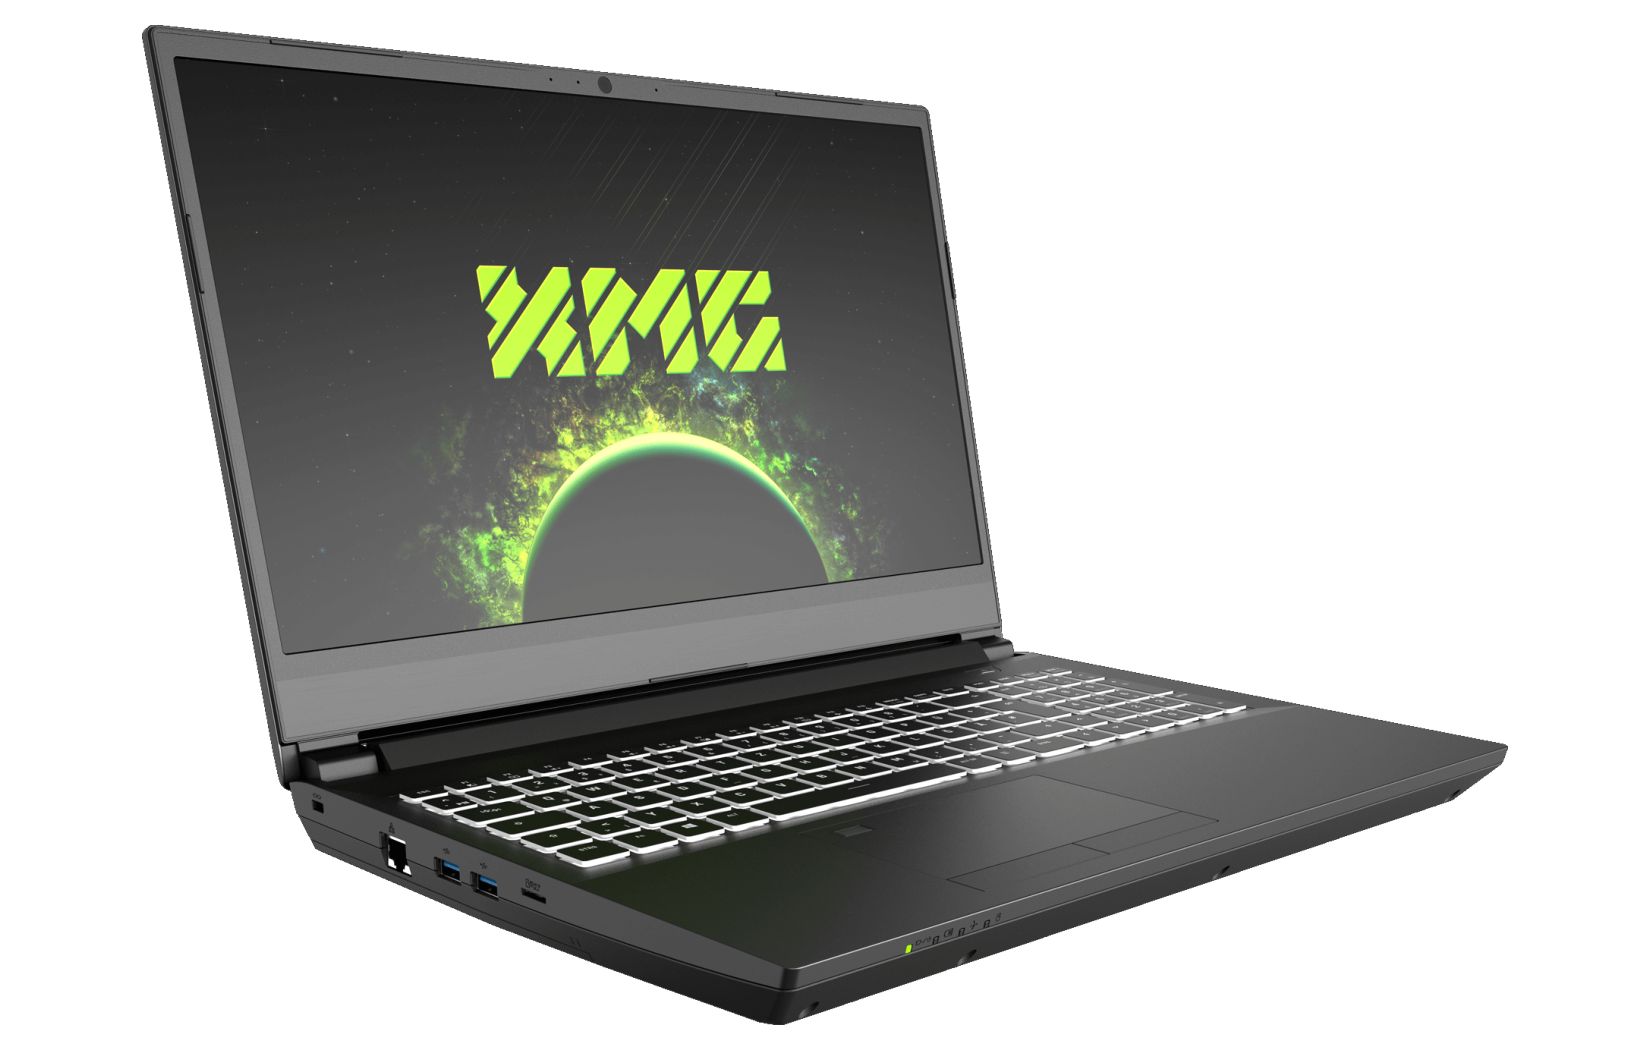 XMG introduces world's first AMD Ryzen 7 5800X3D powered laptop